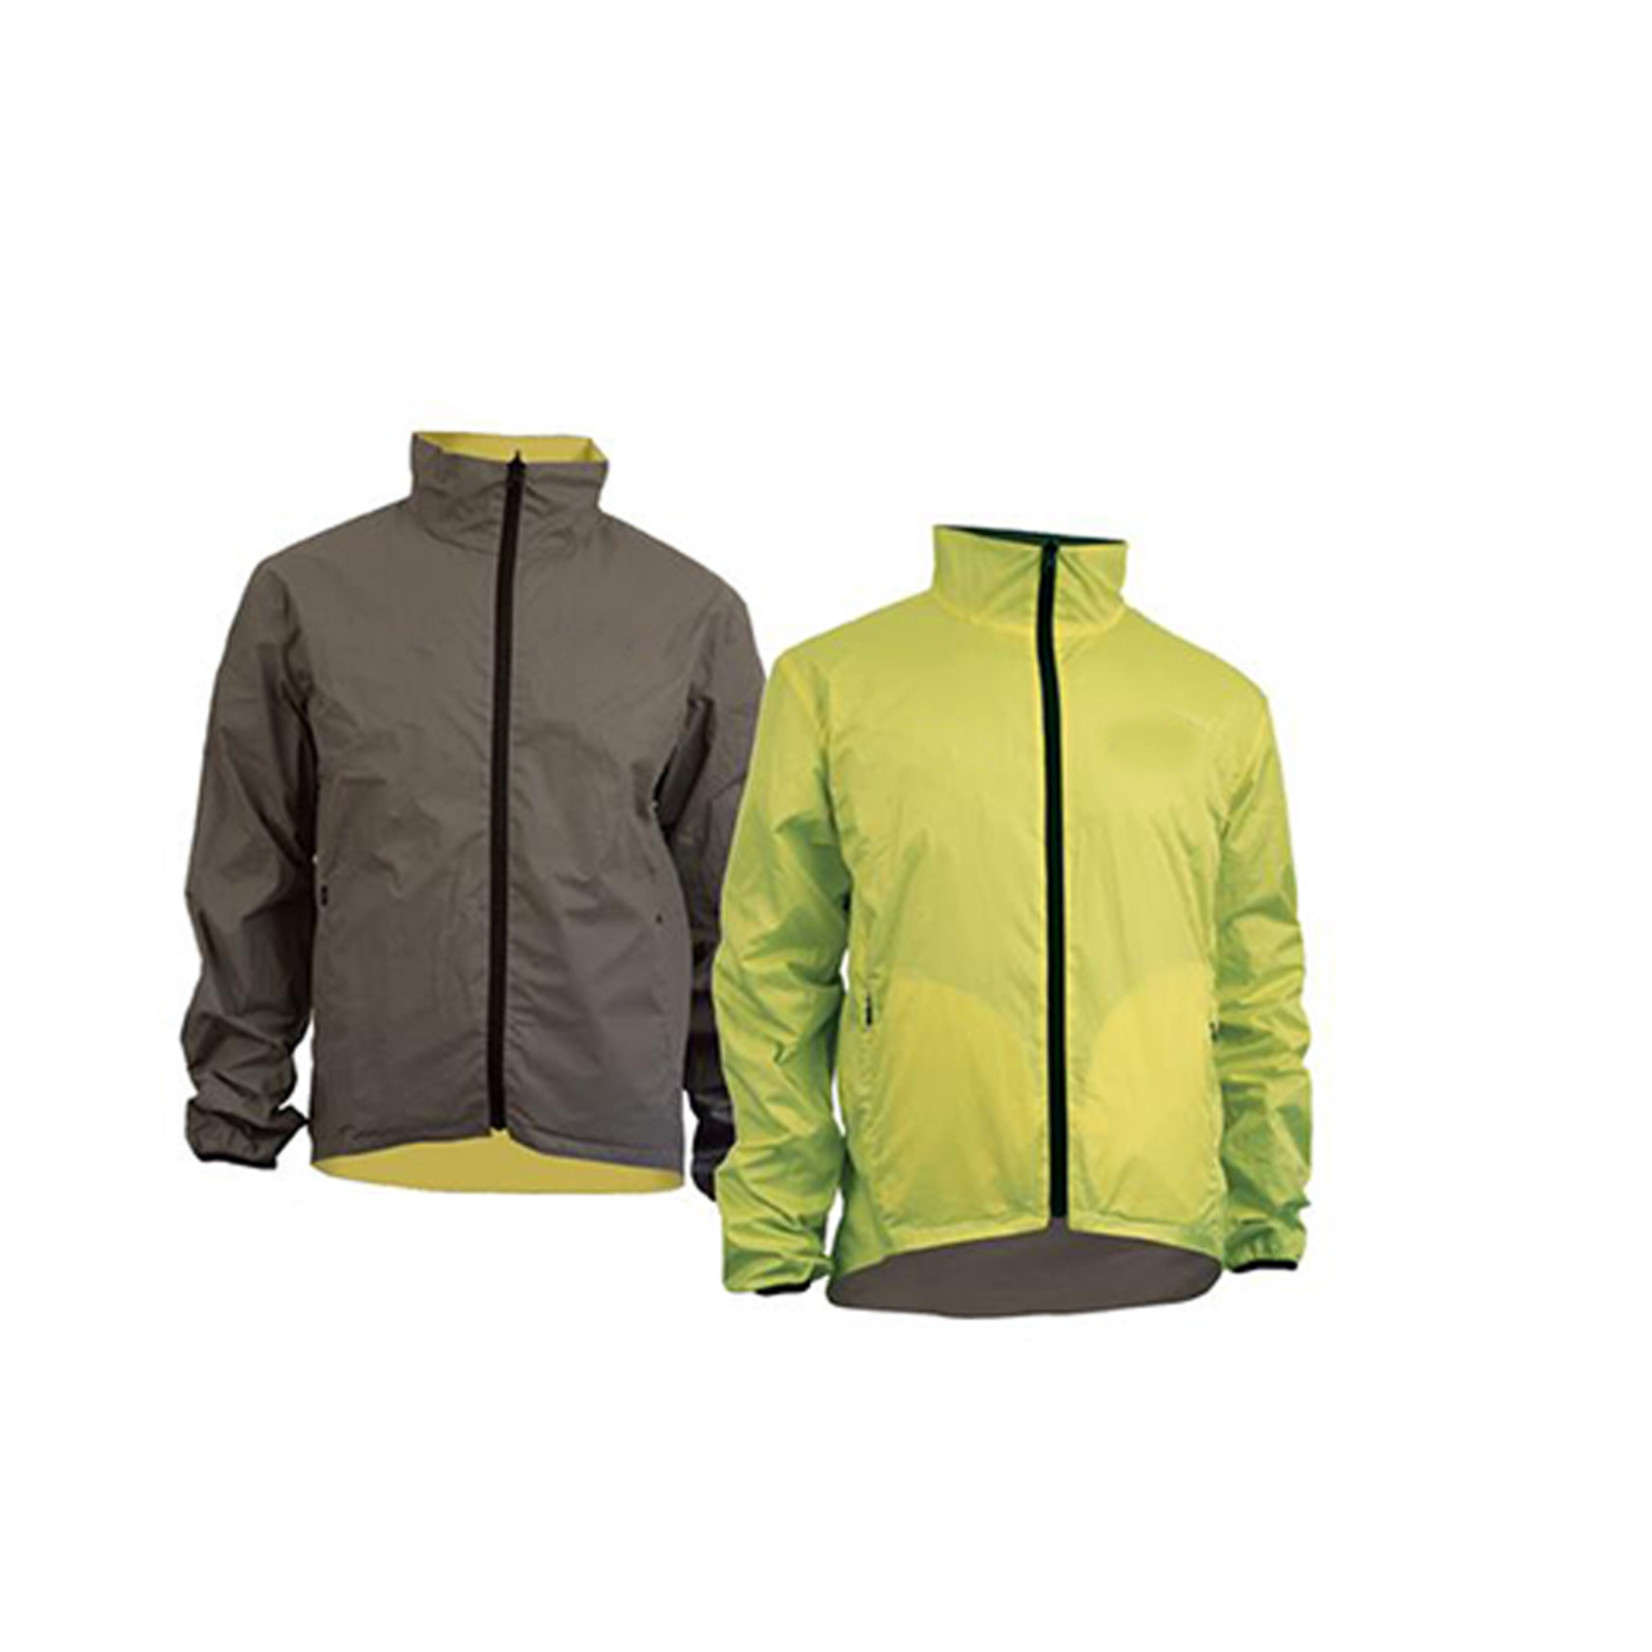 Azur Azur Transverse Bike Jacket Waterproof Breathable Fabric - Fluro Yellow - Small